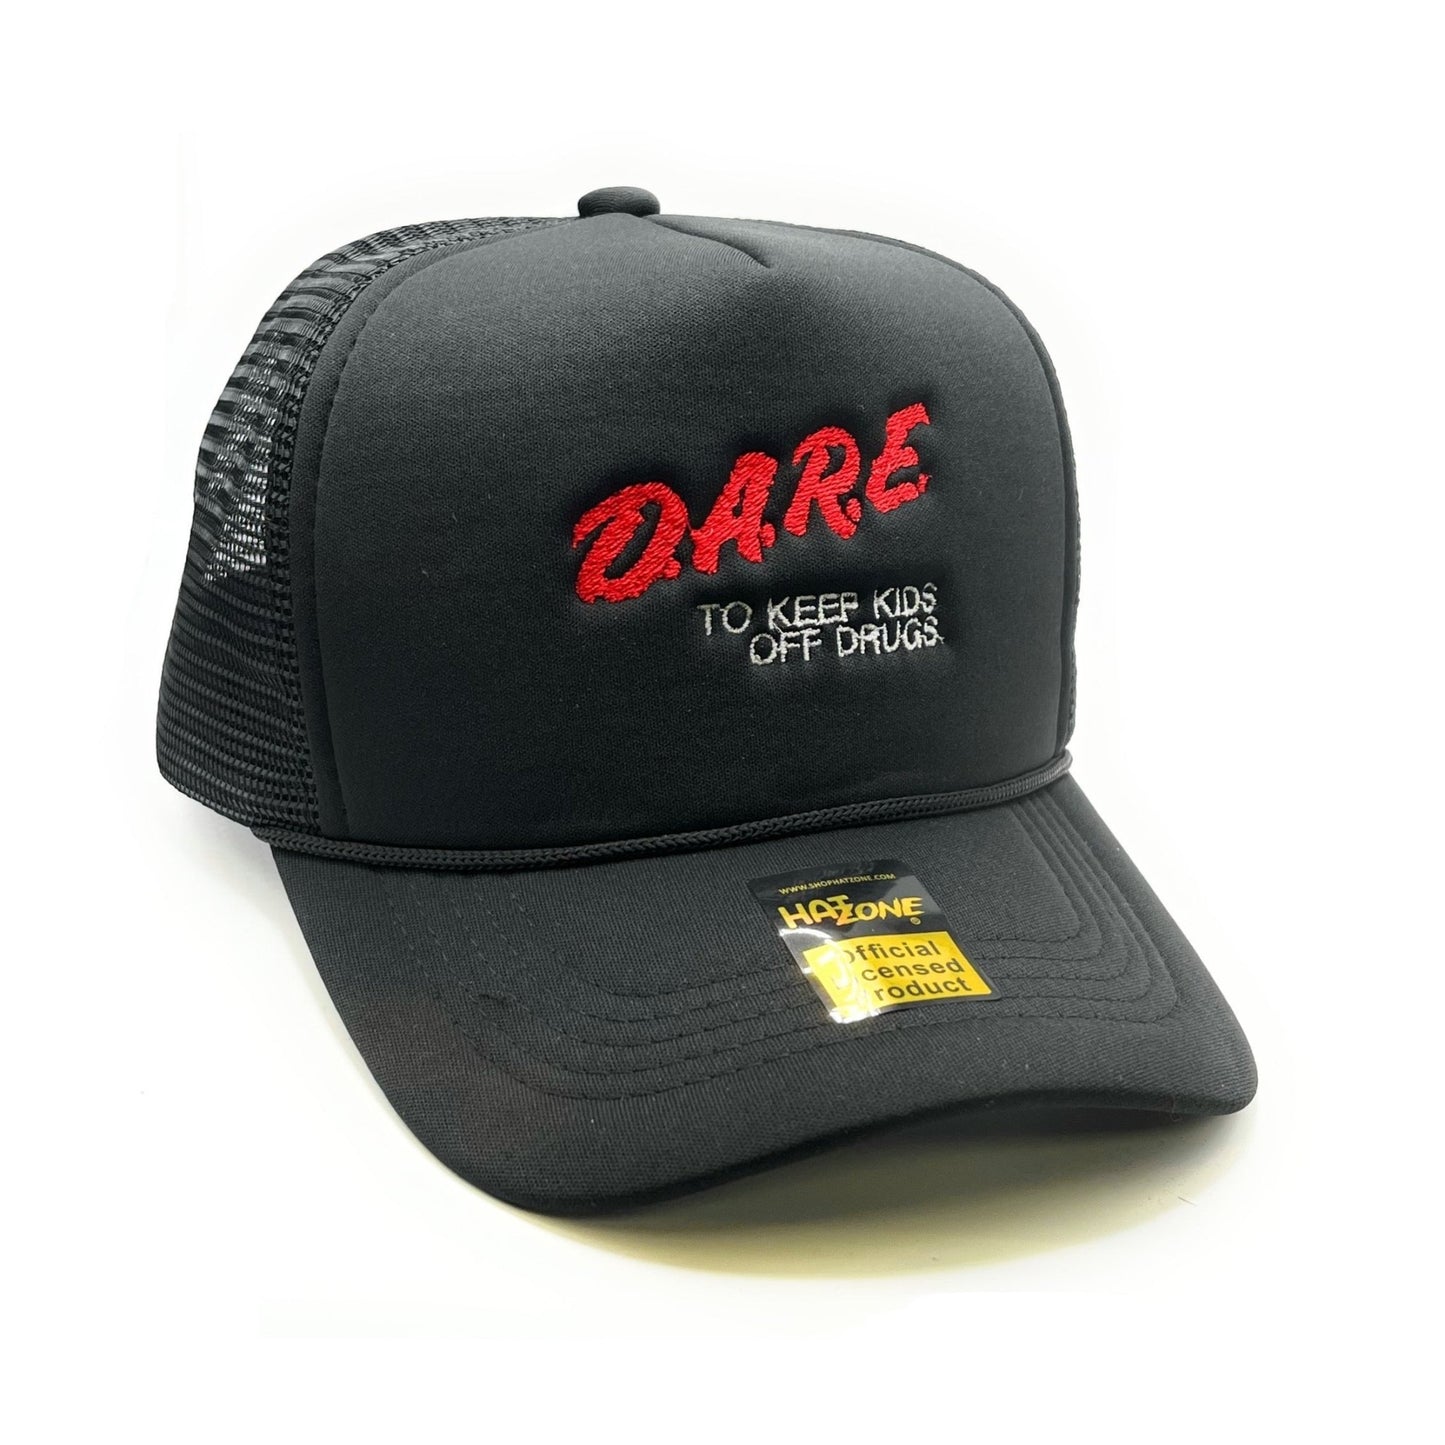 Dare Mesh Trucker Snapback (Black) - Hat Supreme